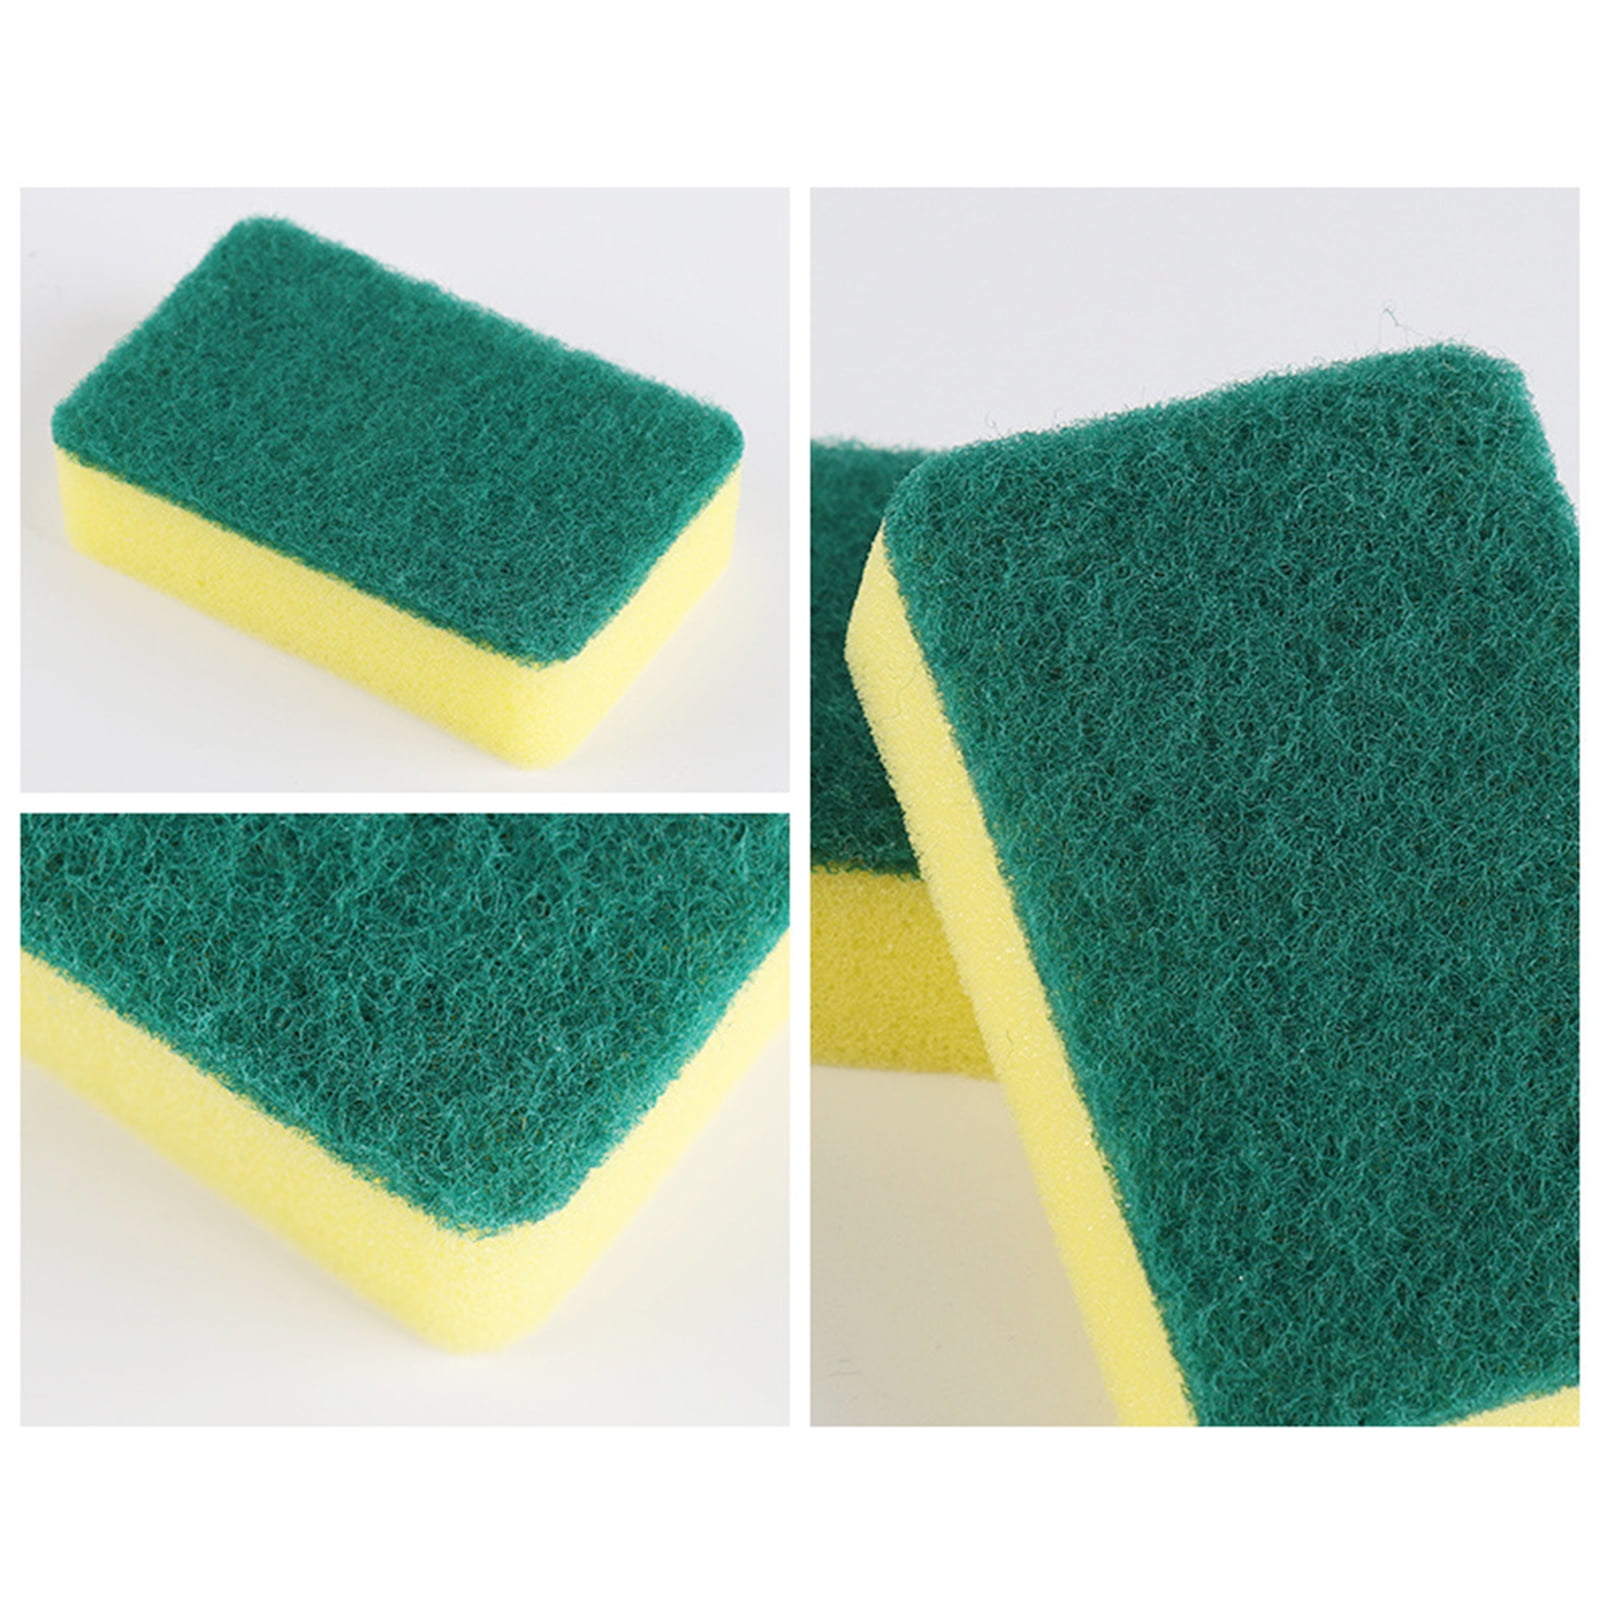 Vegetable-Based Scrubbing Sponge by La Corvette | Boston General Store